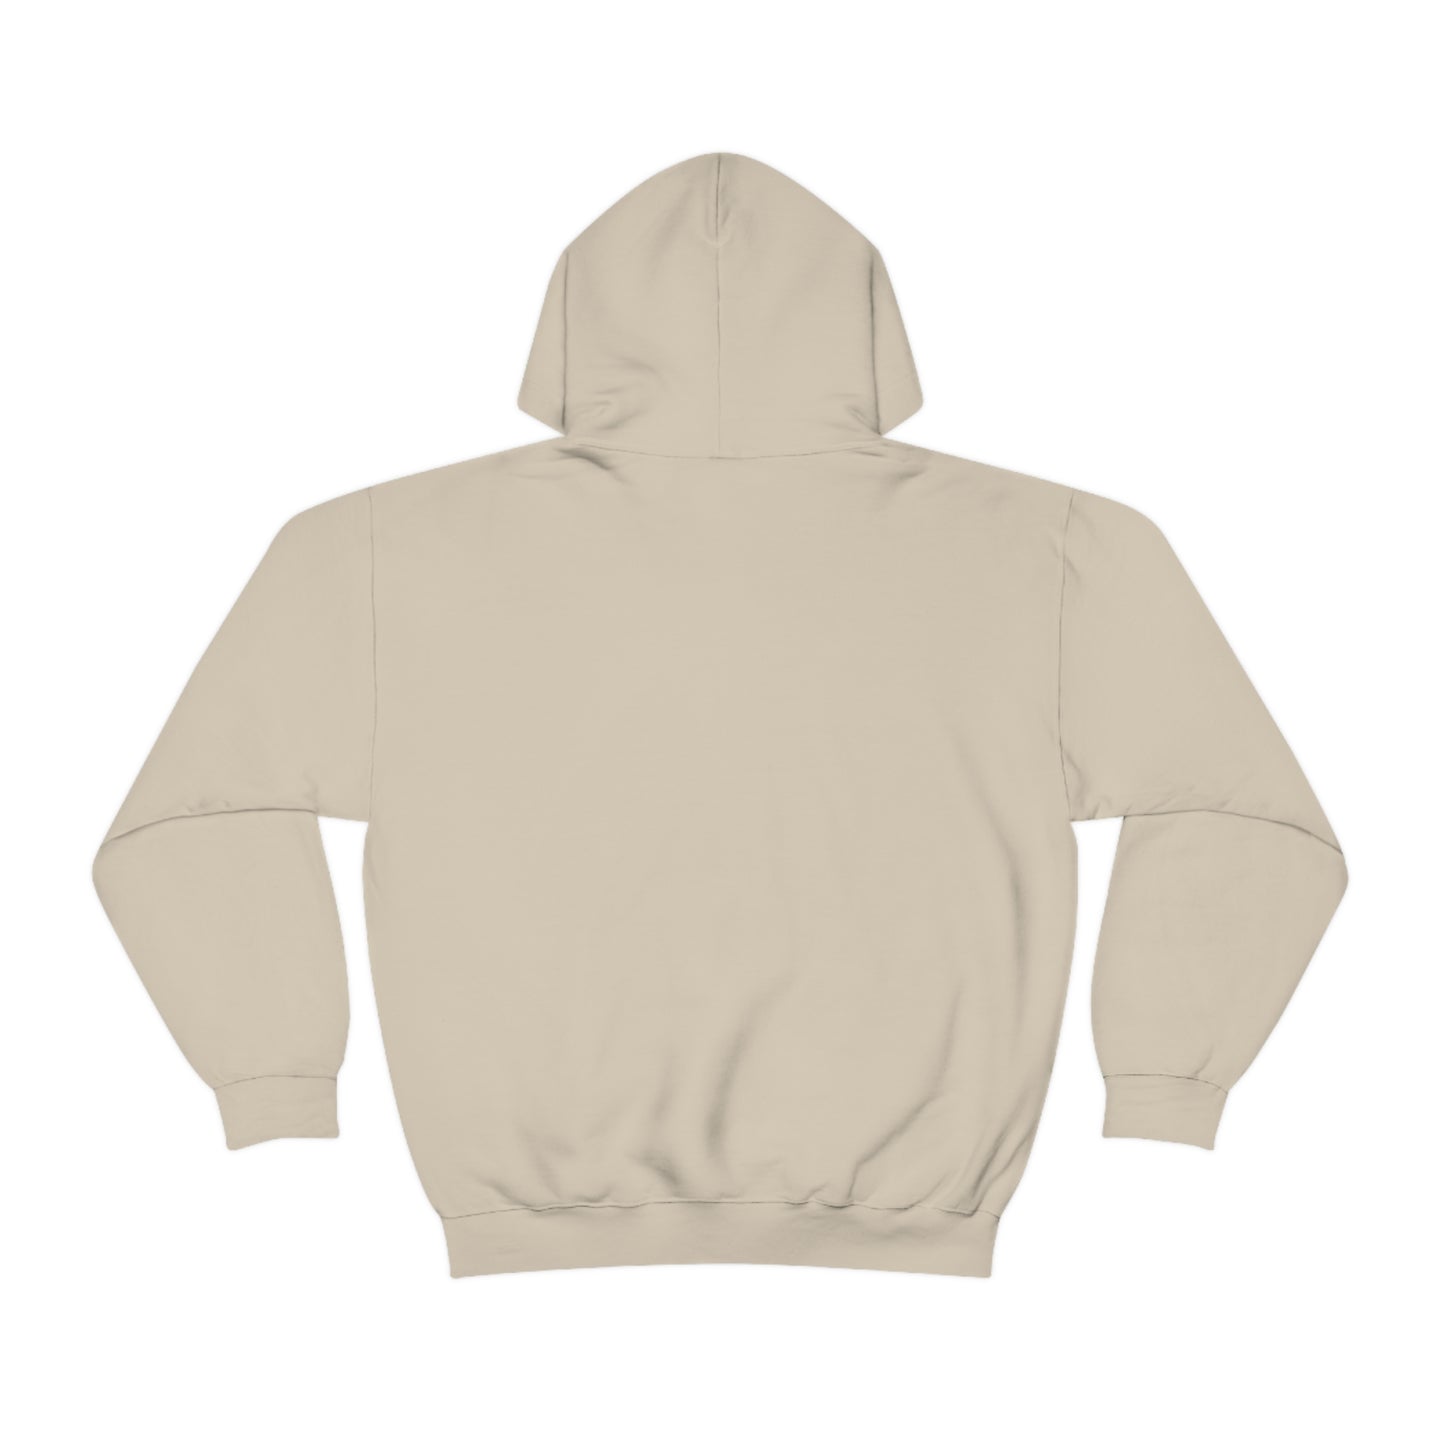 TRICOM Hooded Sweatshirt